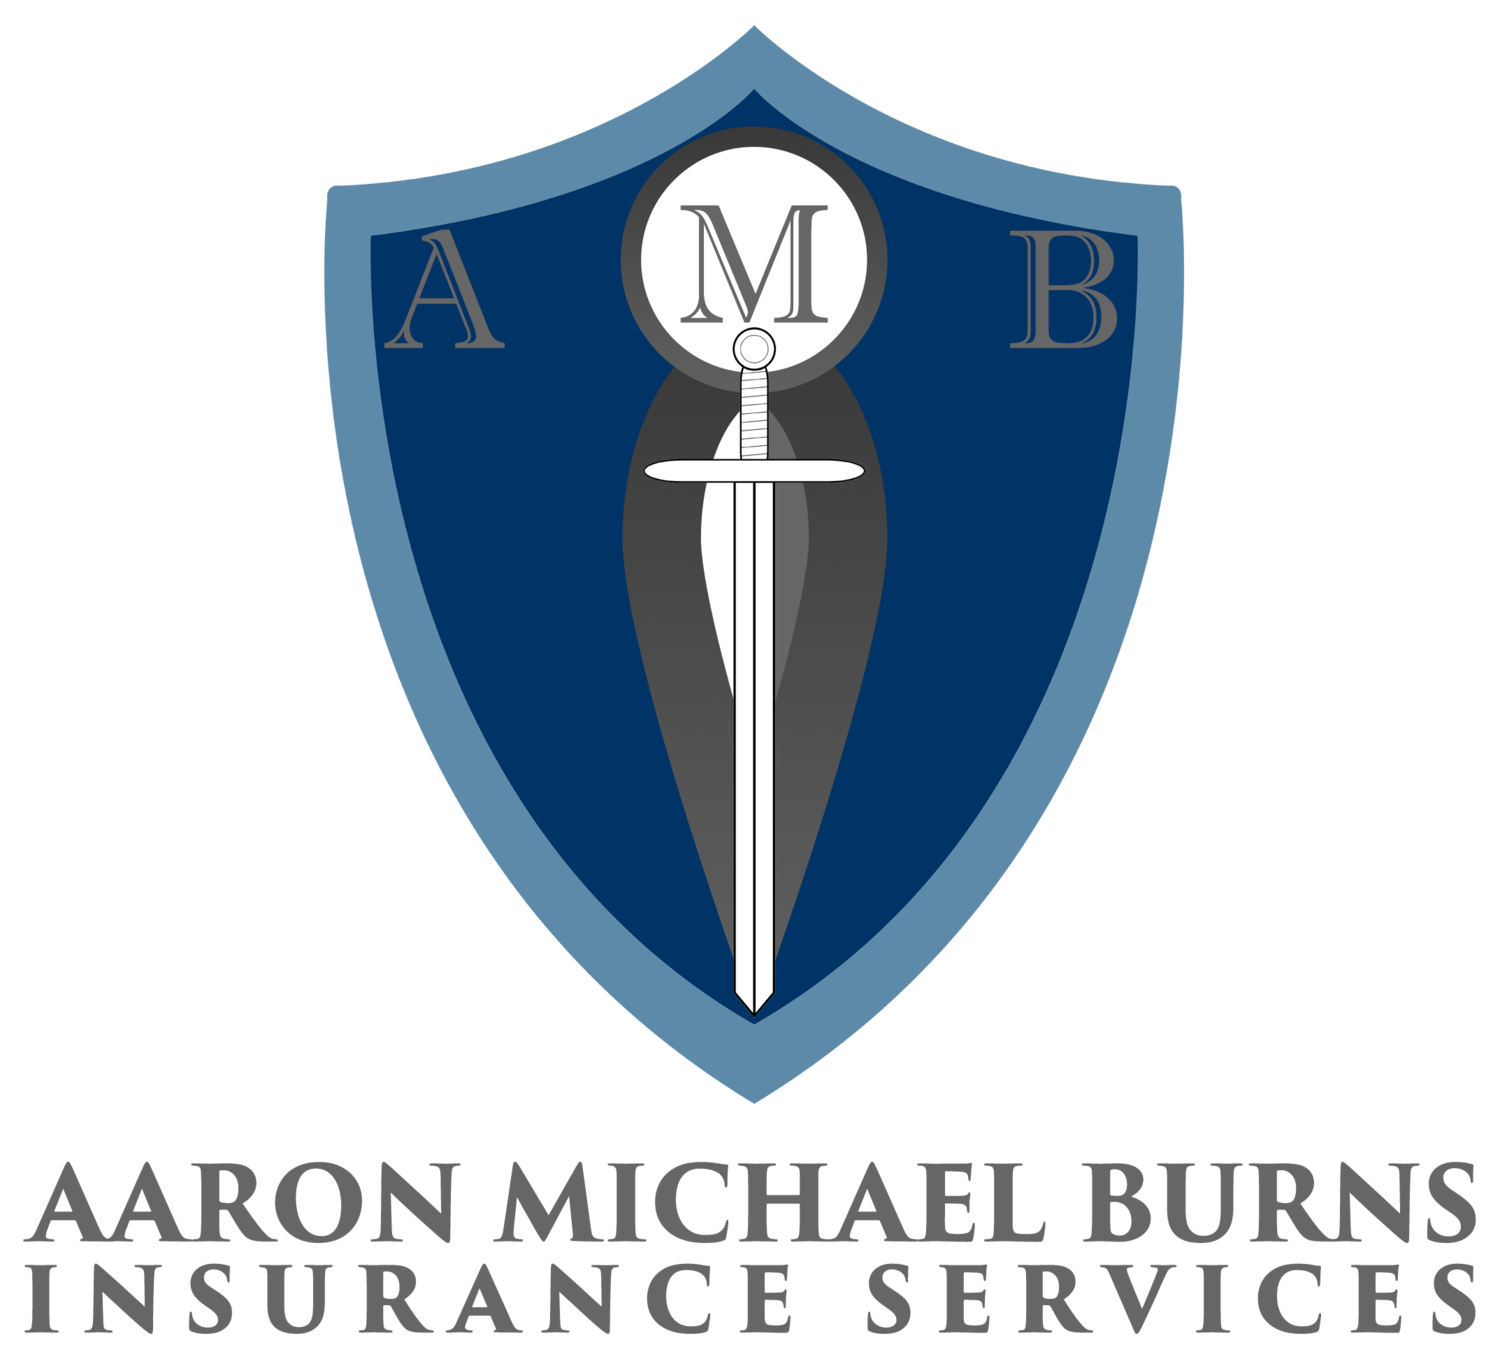 Aaron Michael Burns Insurance Services